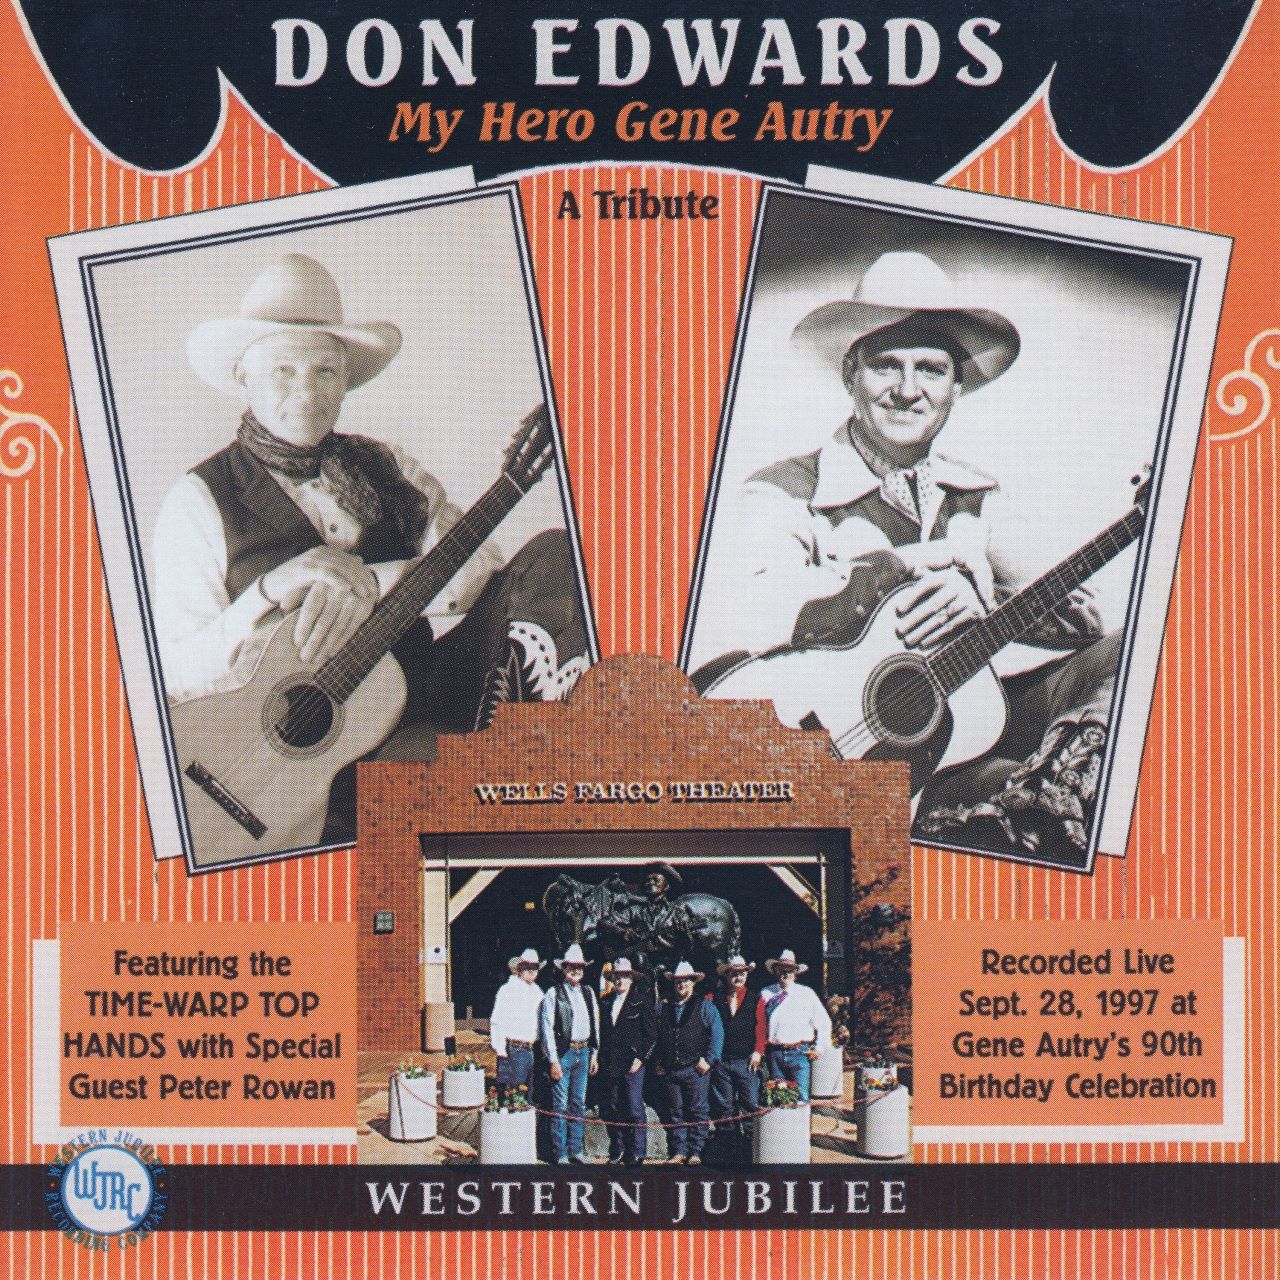 Don Edwards - My Hero Gene Autry cover album